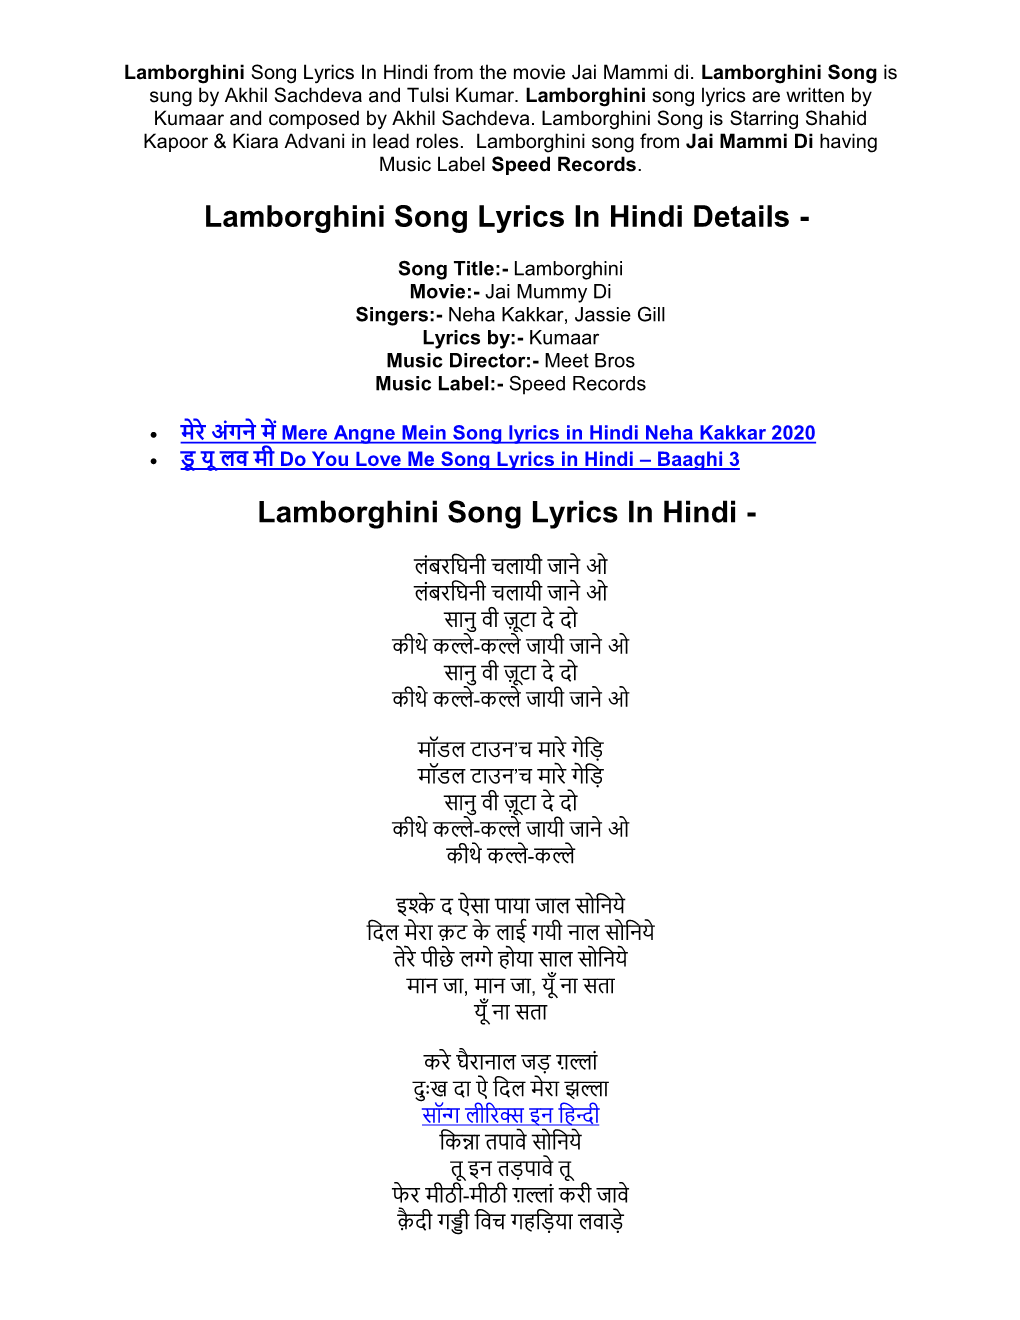 Lamborghini Song Lyrics in Hindi Details